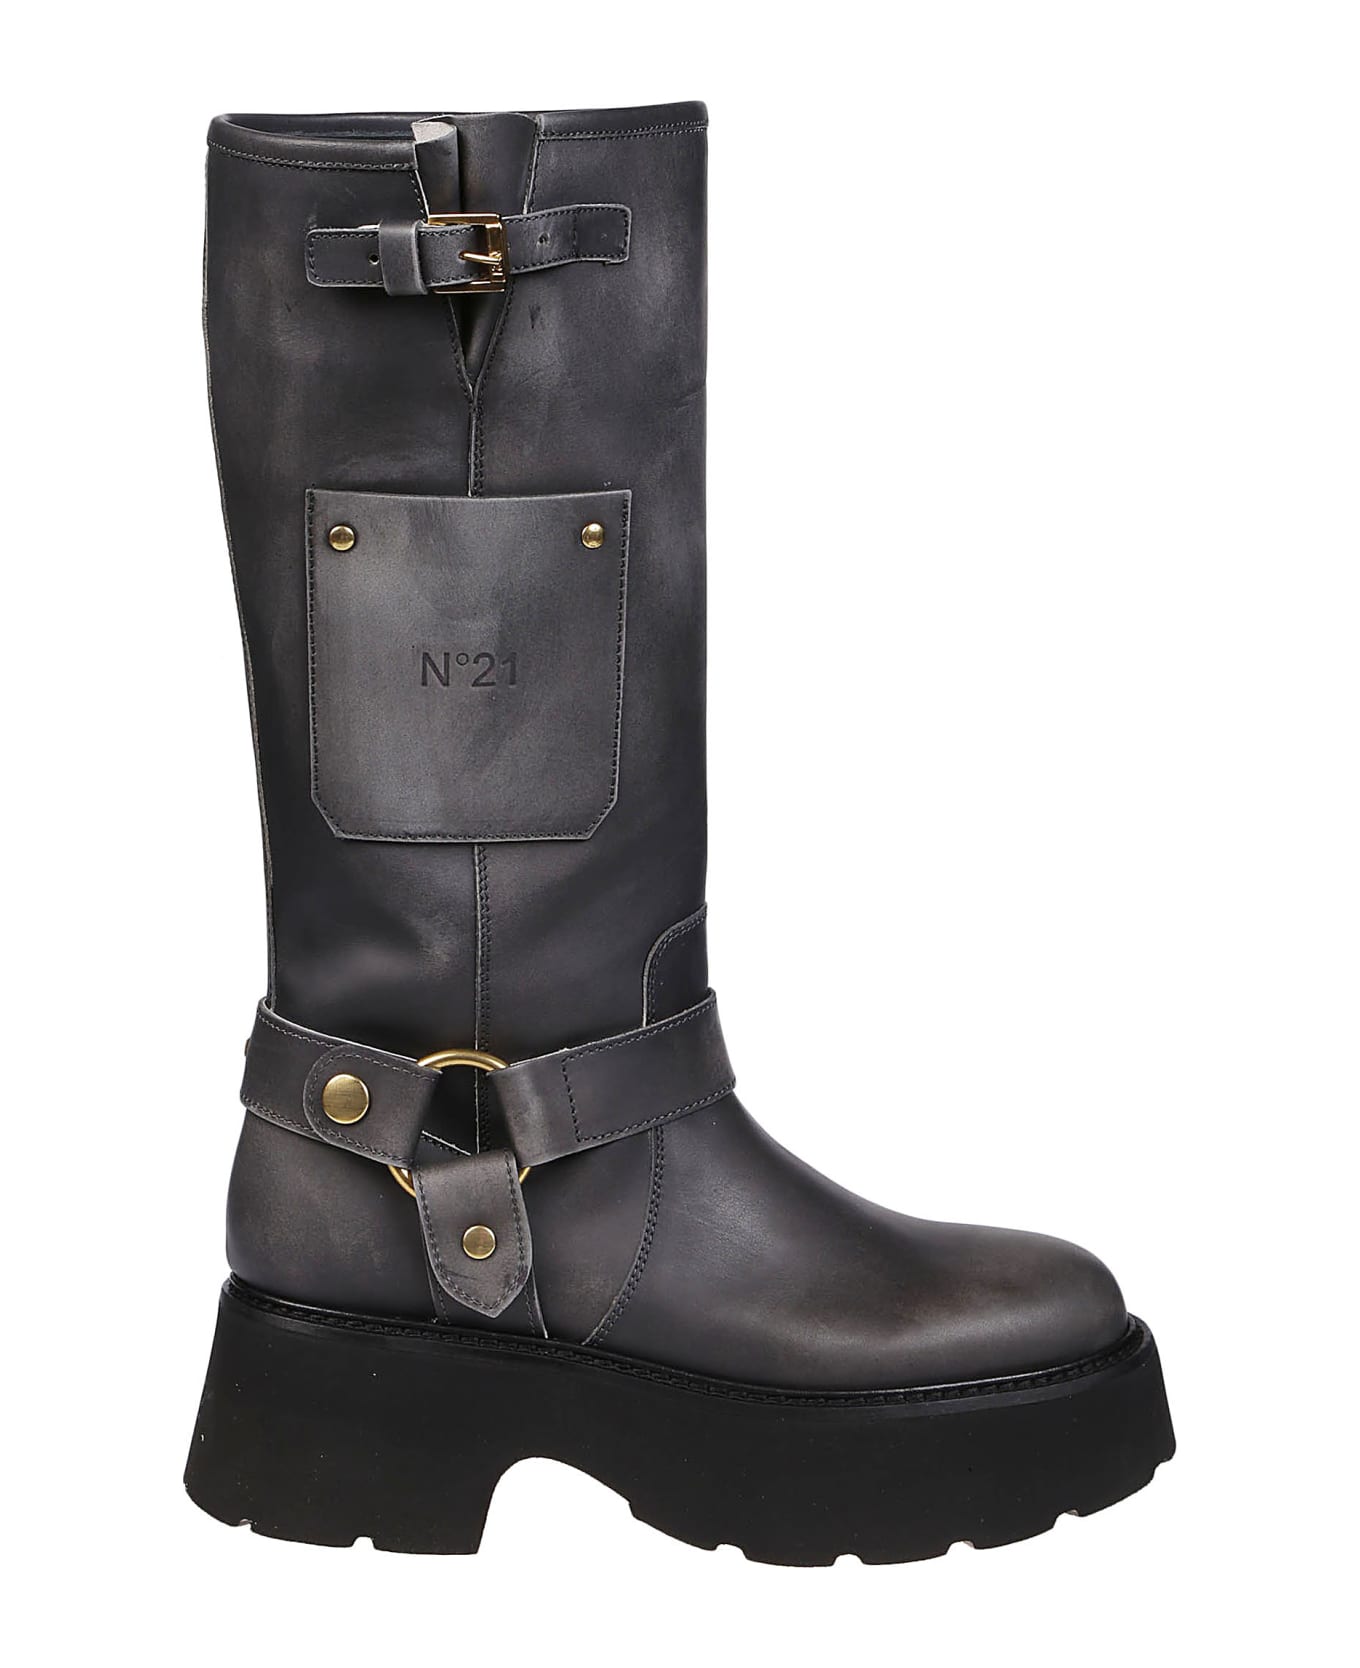 N.21 Boots - Grey